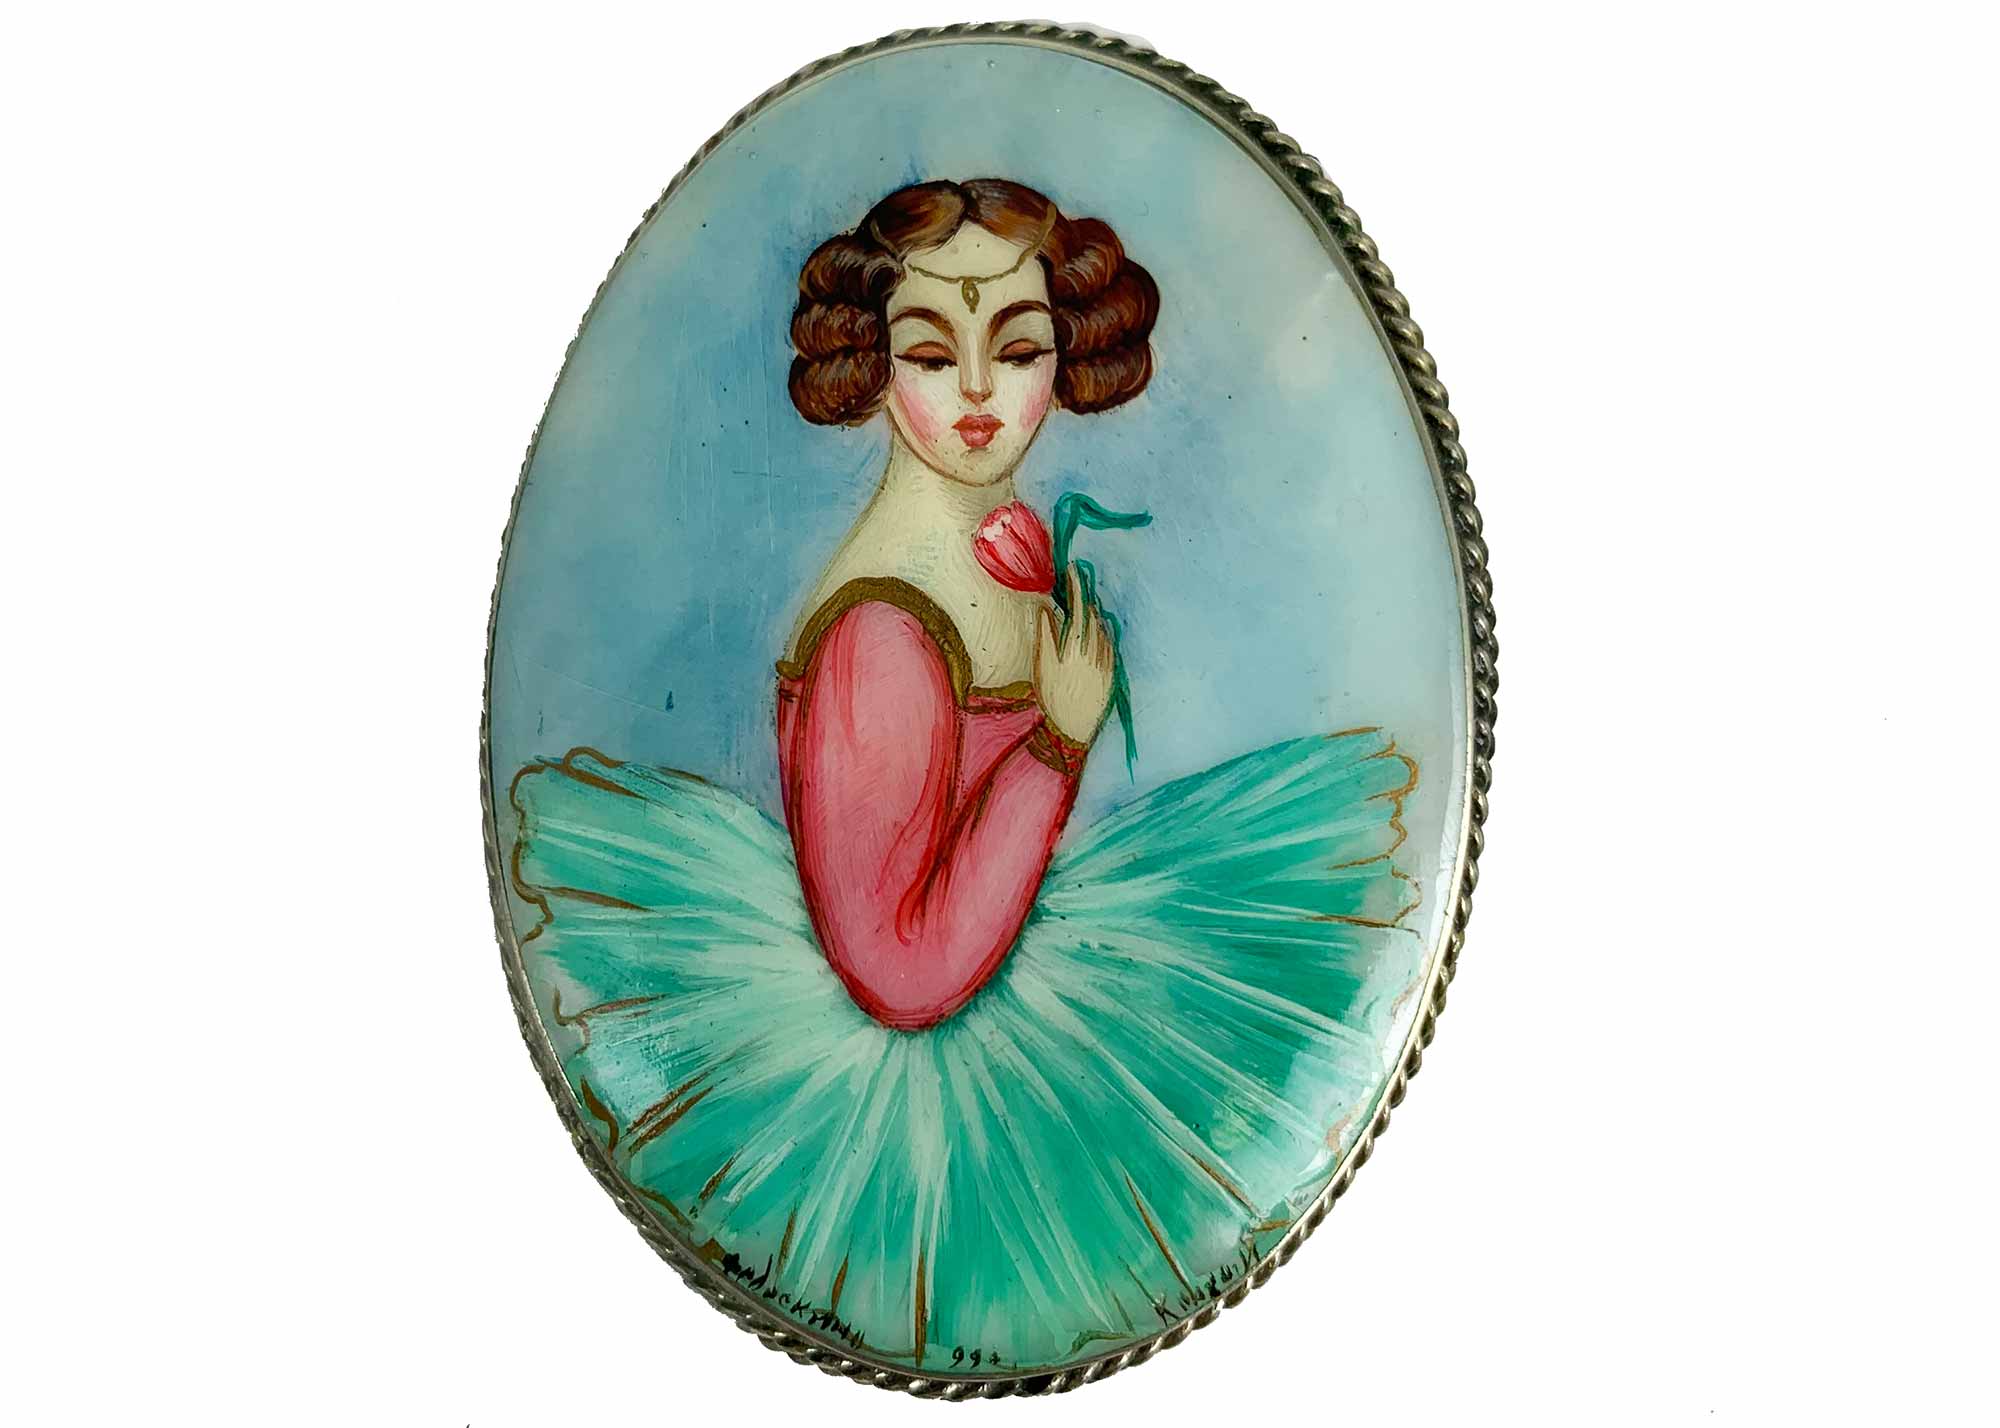 Buy Vintage Mother of Pearl Portrait Brooch at GoldenCockerel.com